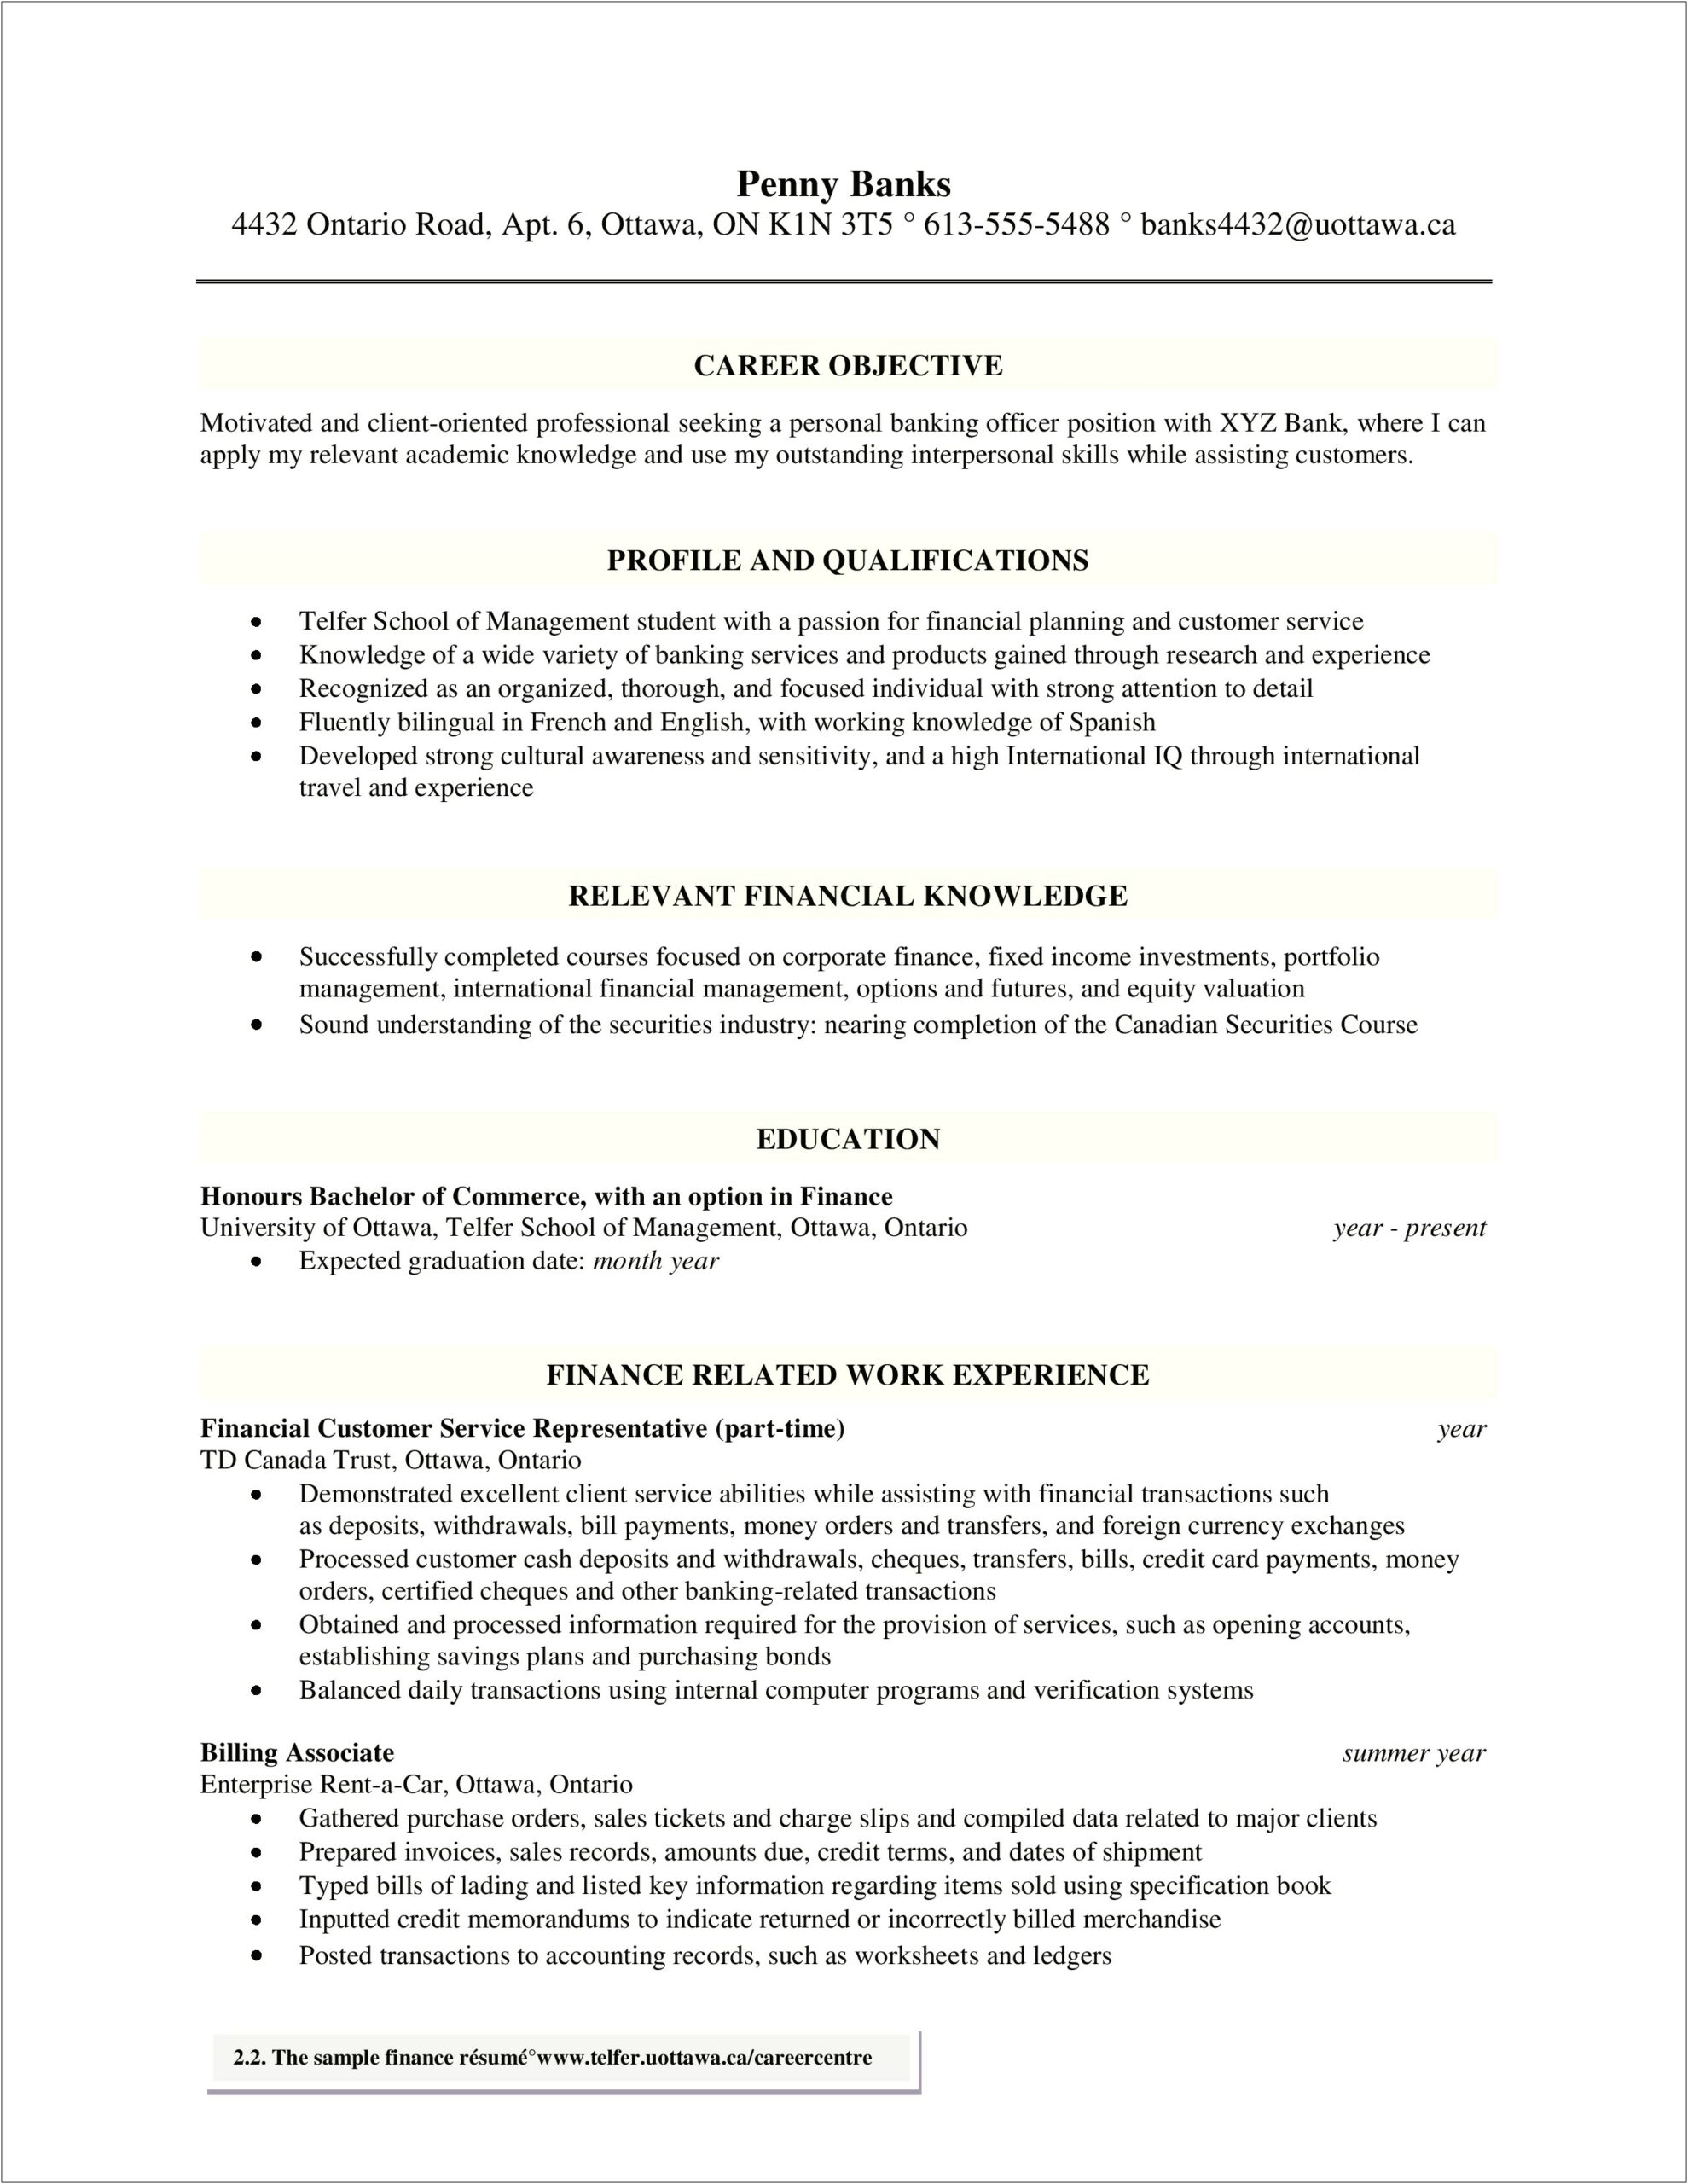 Resume Objective For Financial Service Representative